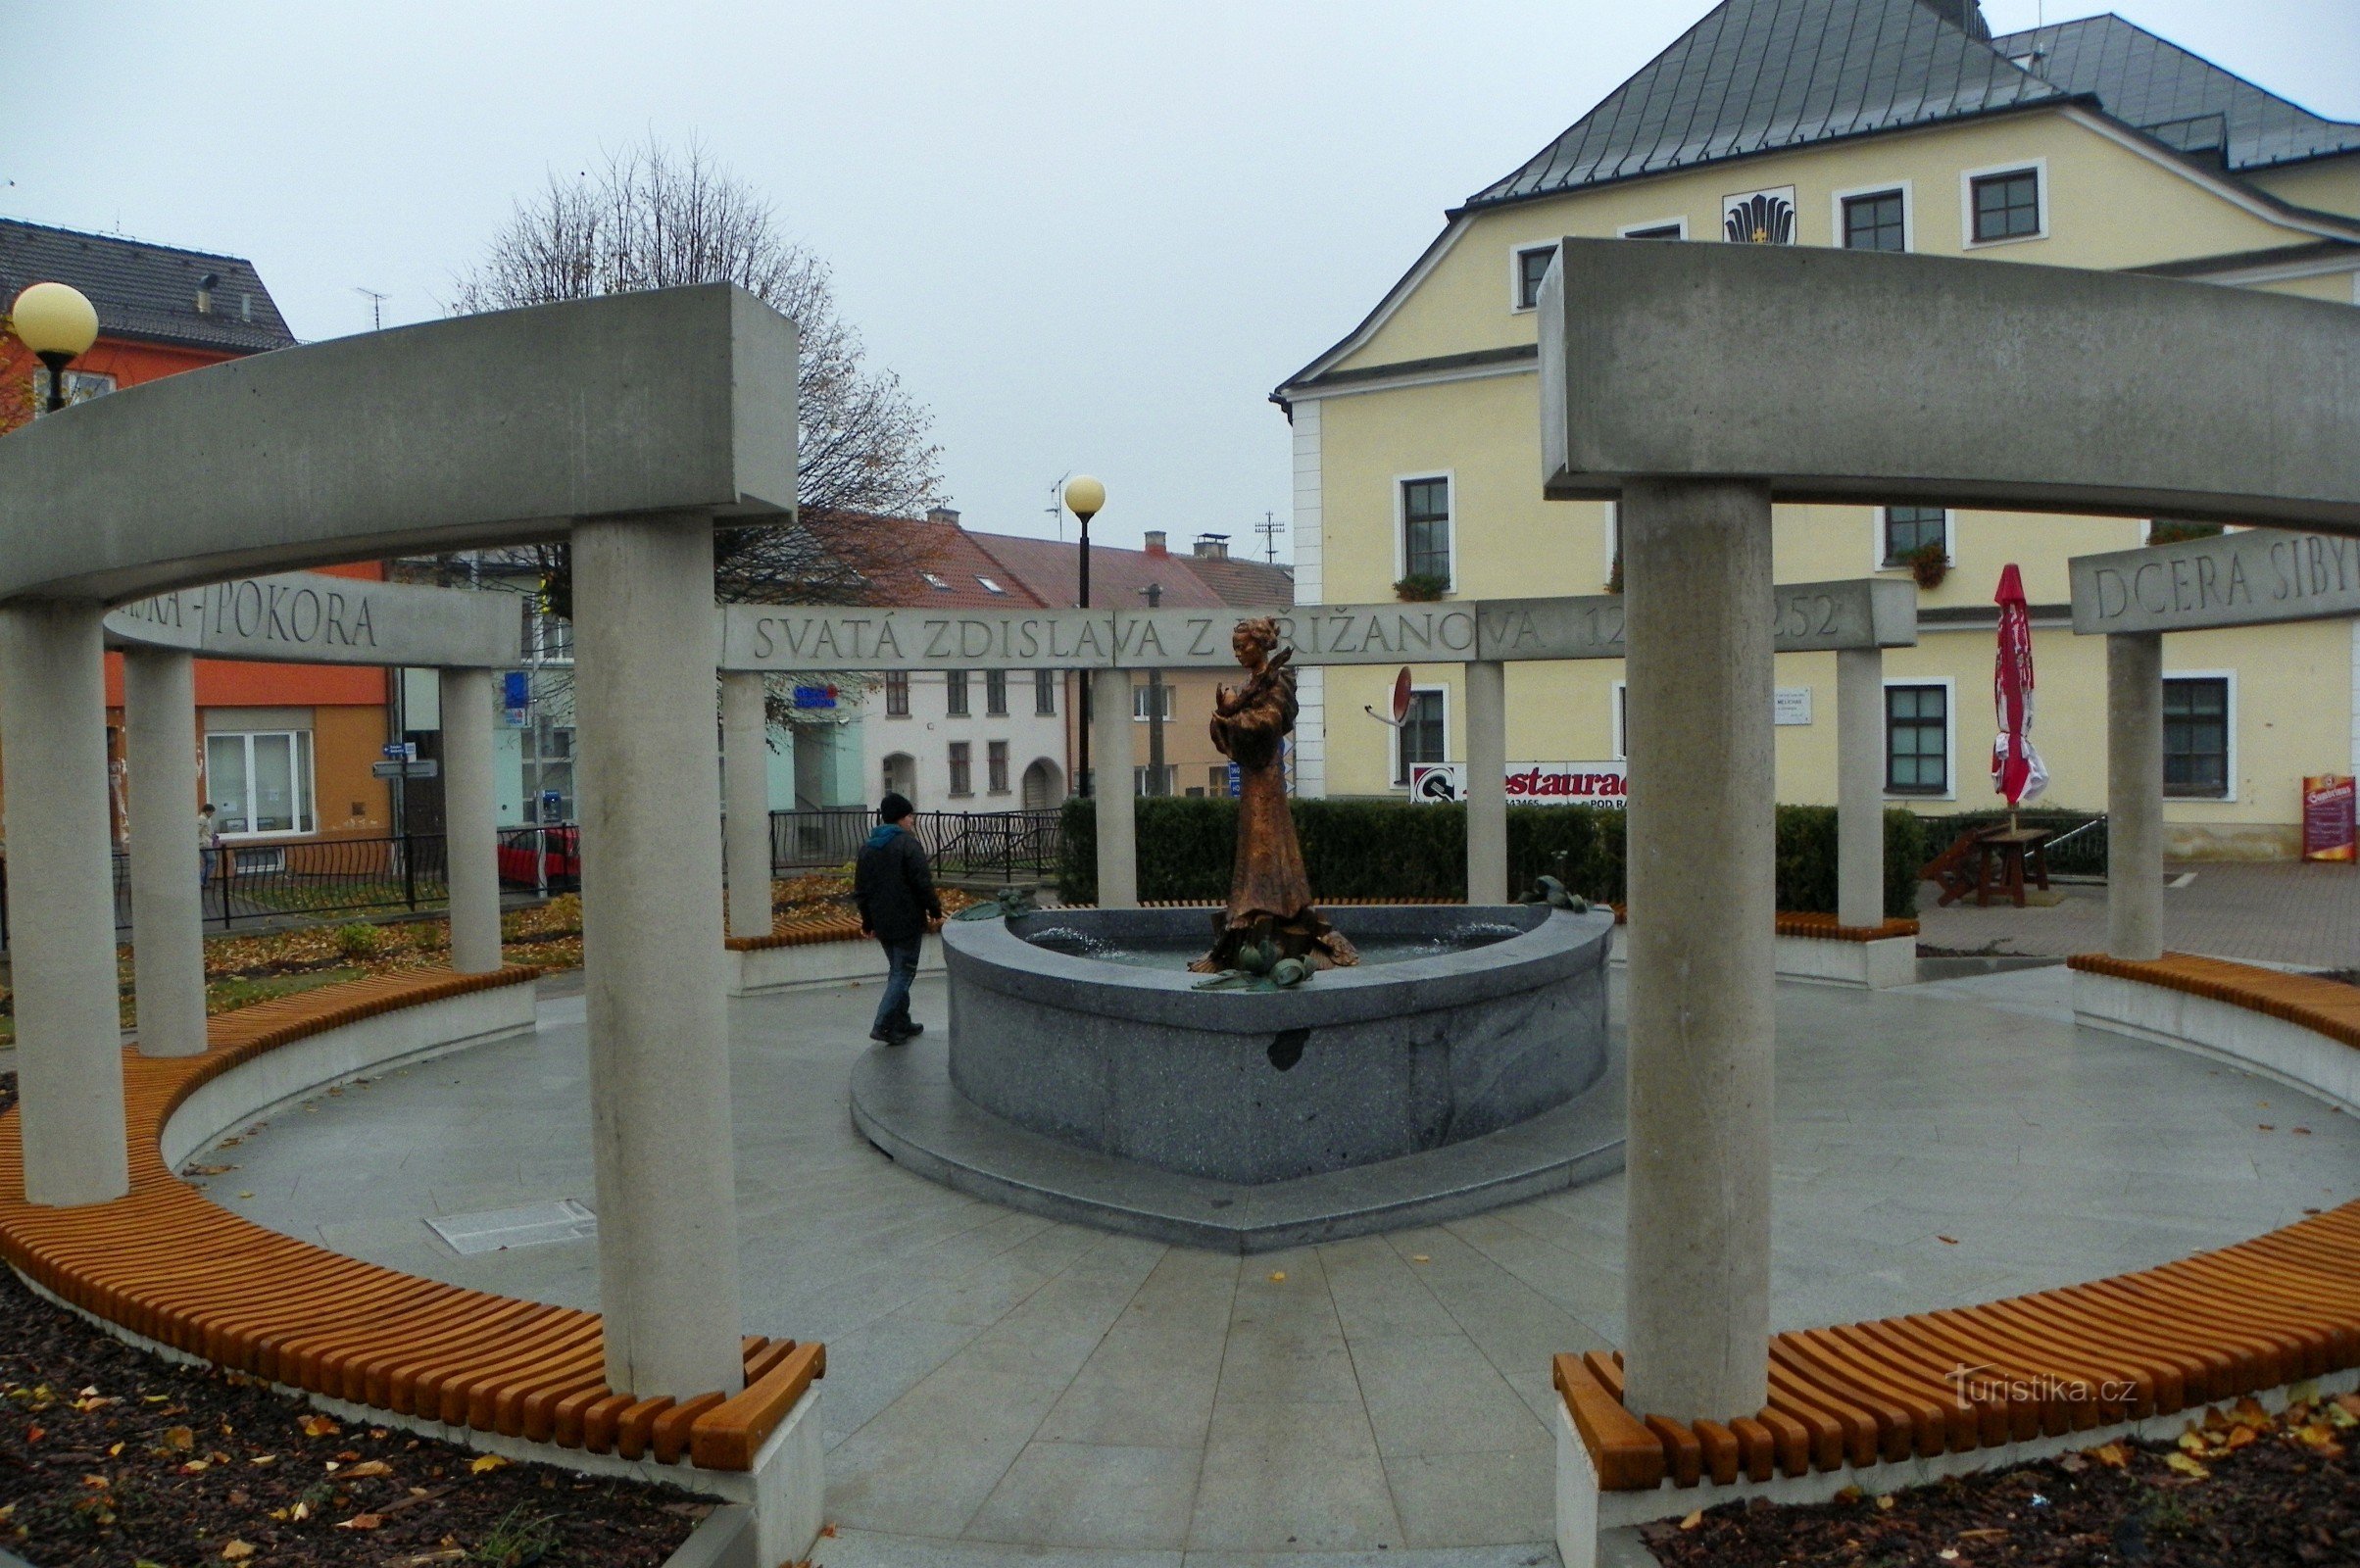 Monumentul Sf. Zdislava din Křižanov